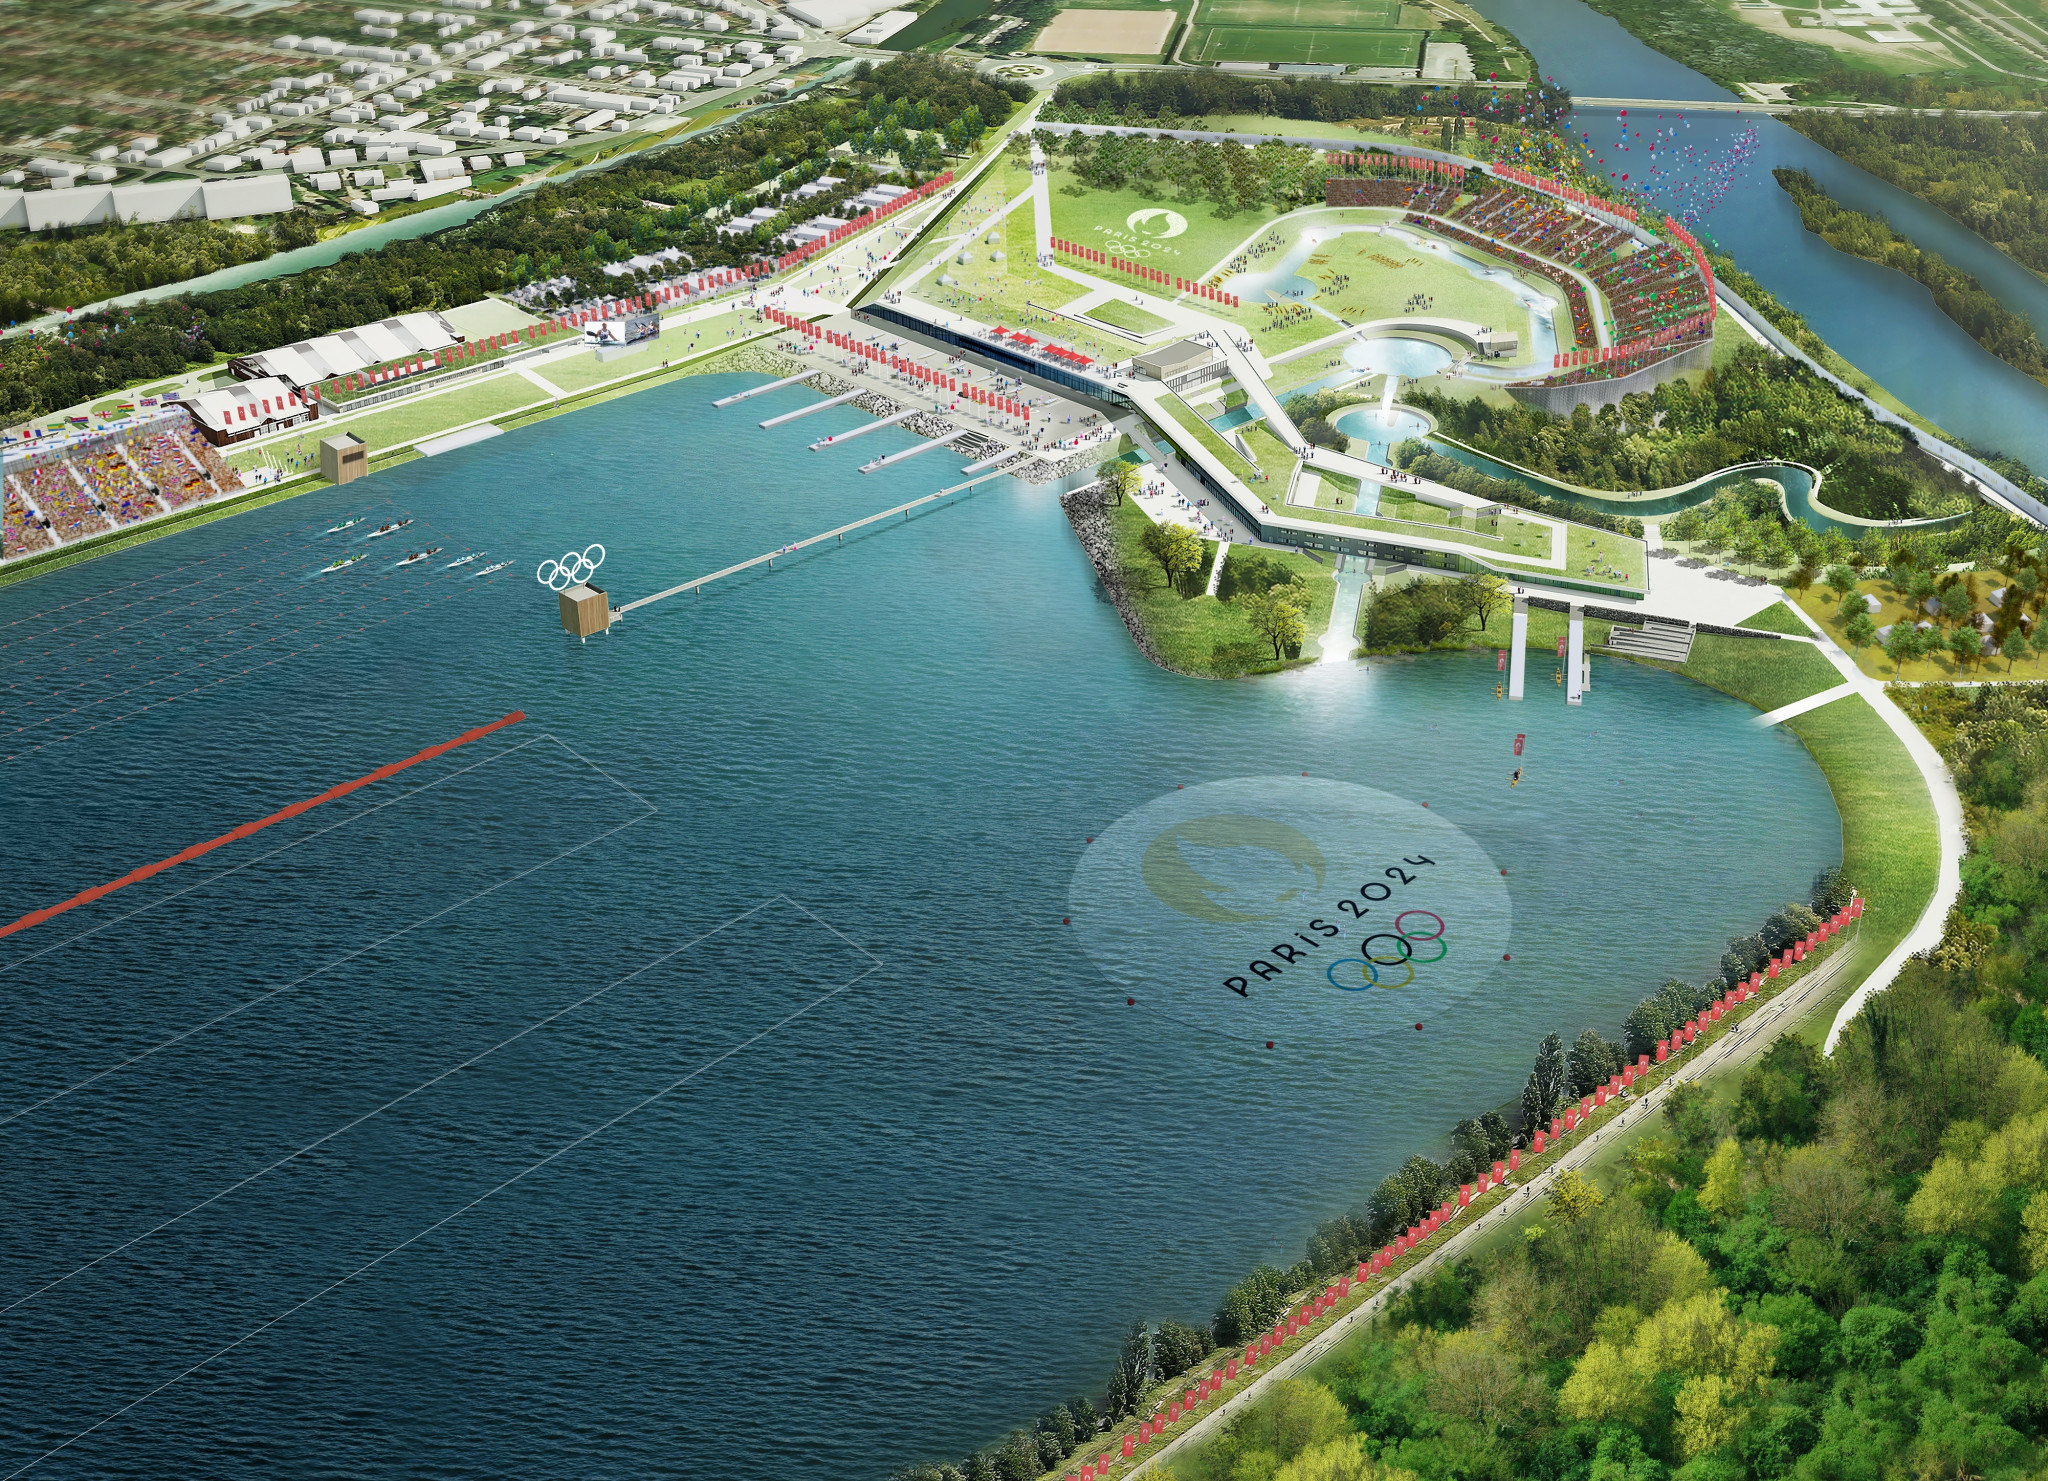 Paris 2024 venue to host World Rowing Under-19 Championships